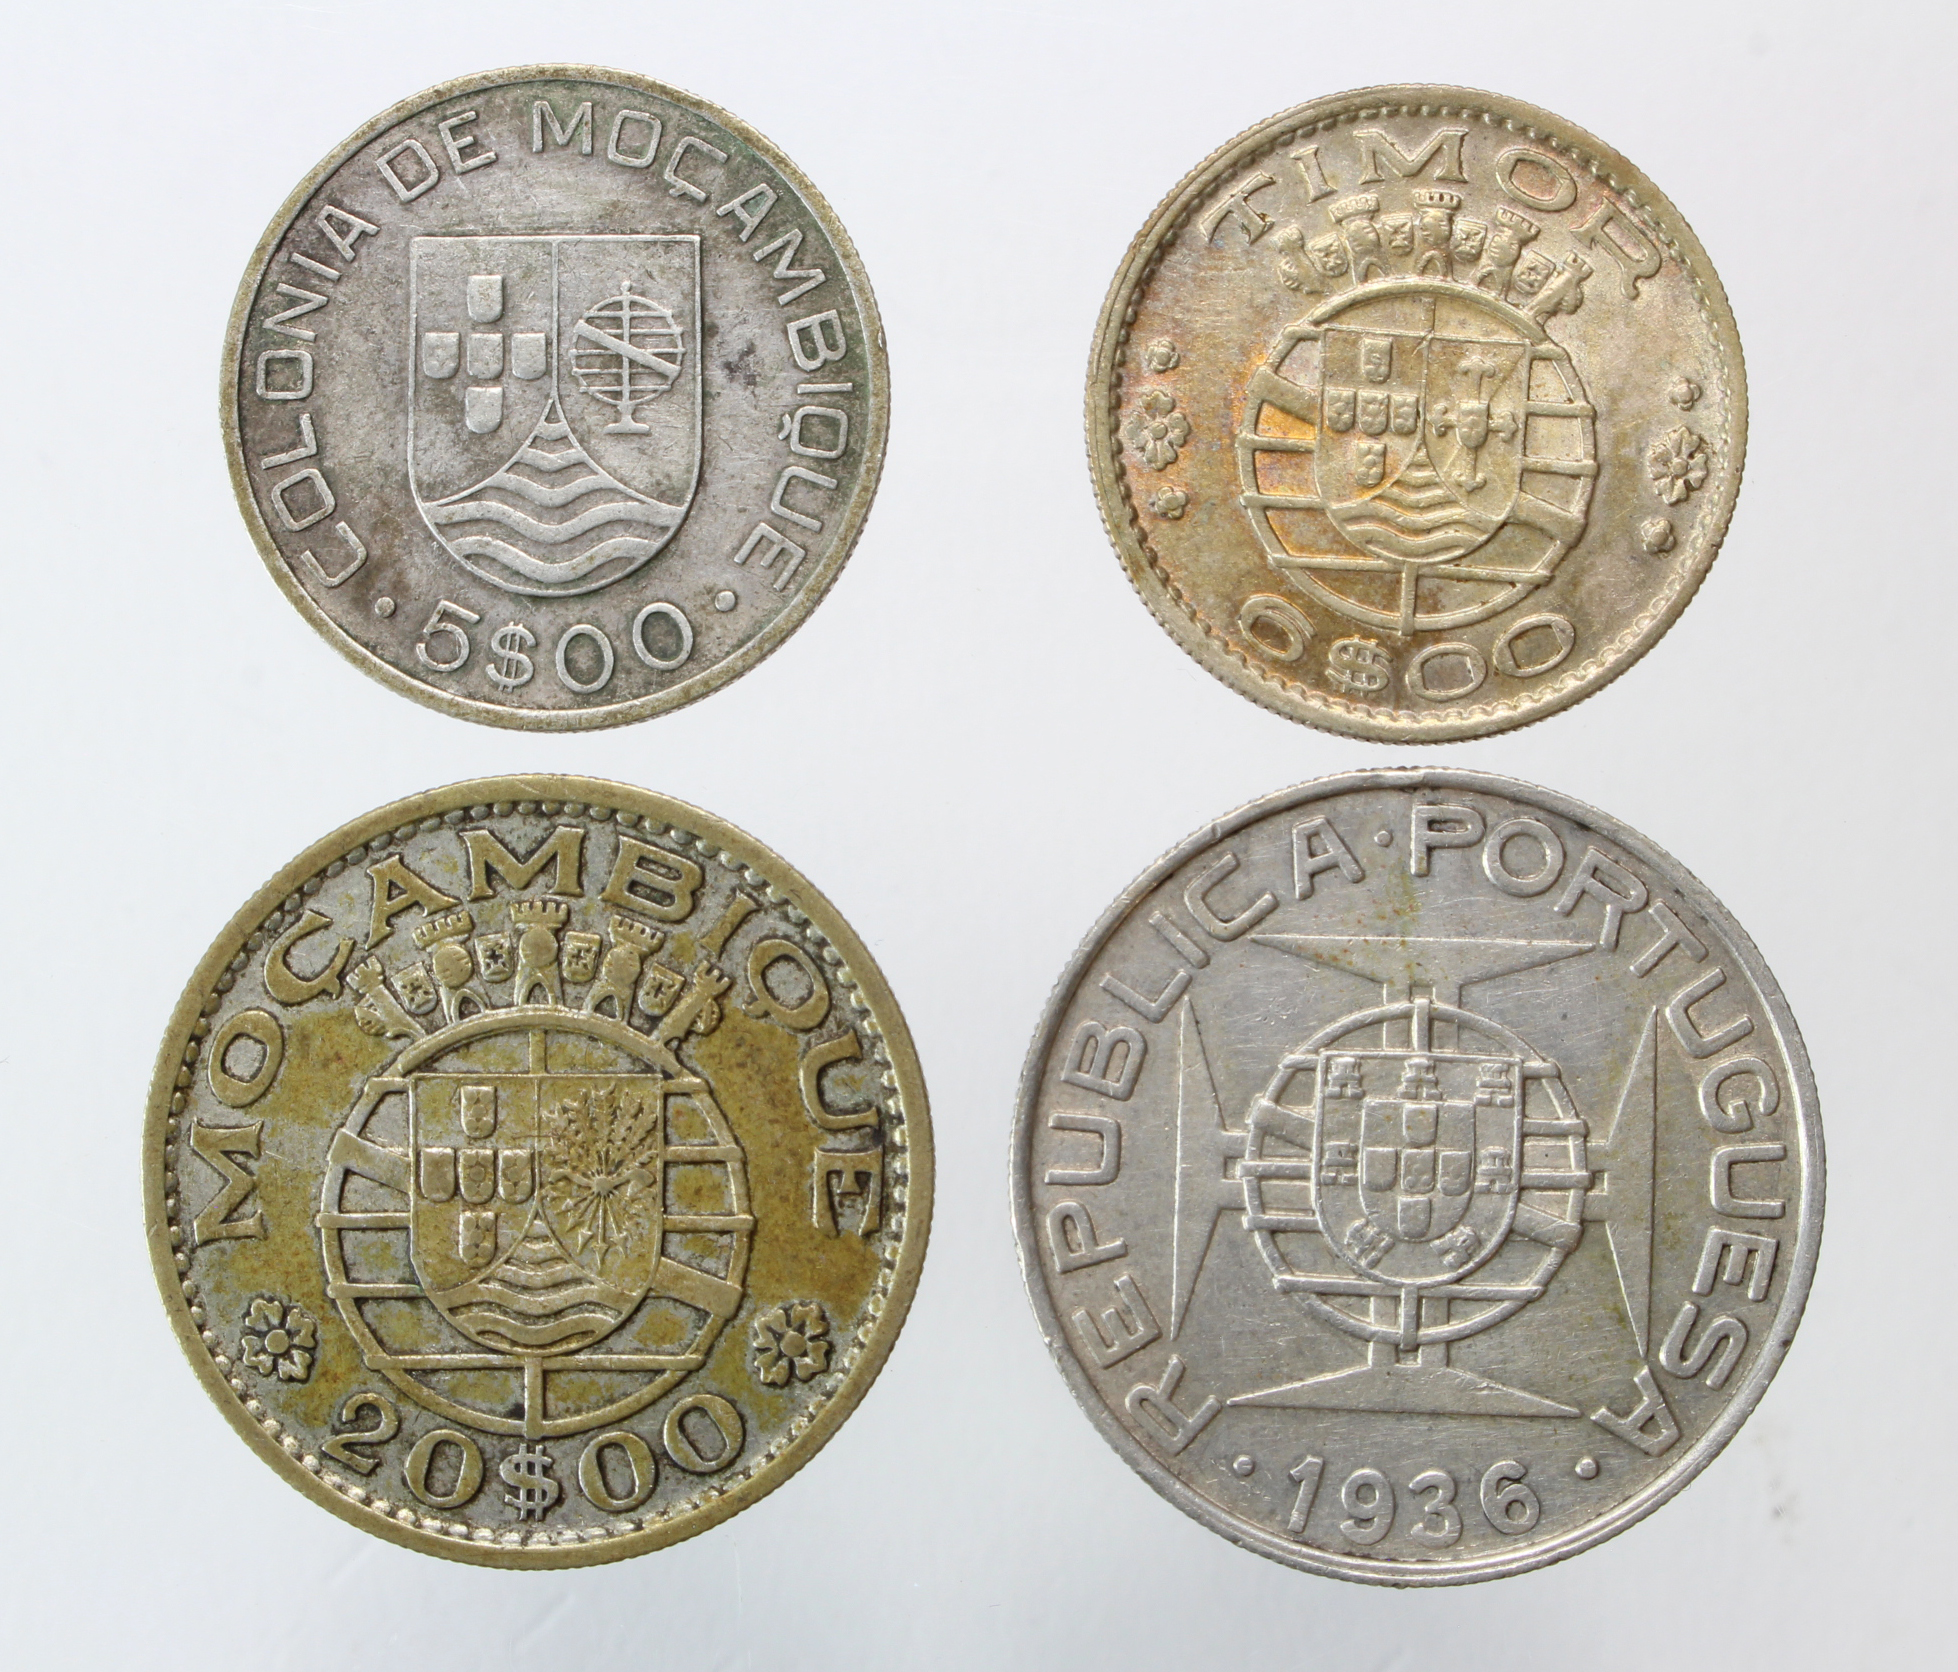 Portuguese Colonial silver (4): Mozambique: 5$00 1935 VF, 10$00 1936 nEF, and 20$00 1960 laquered